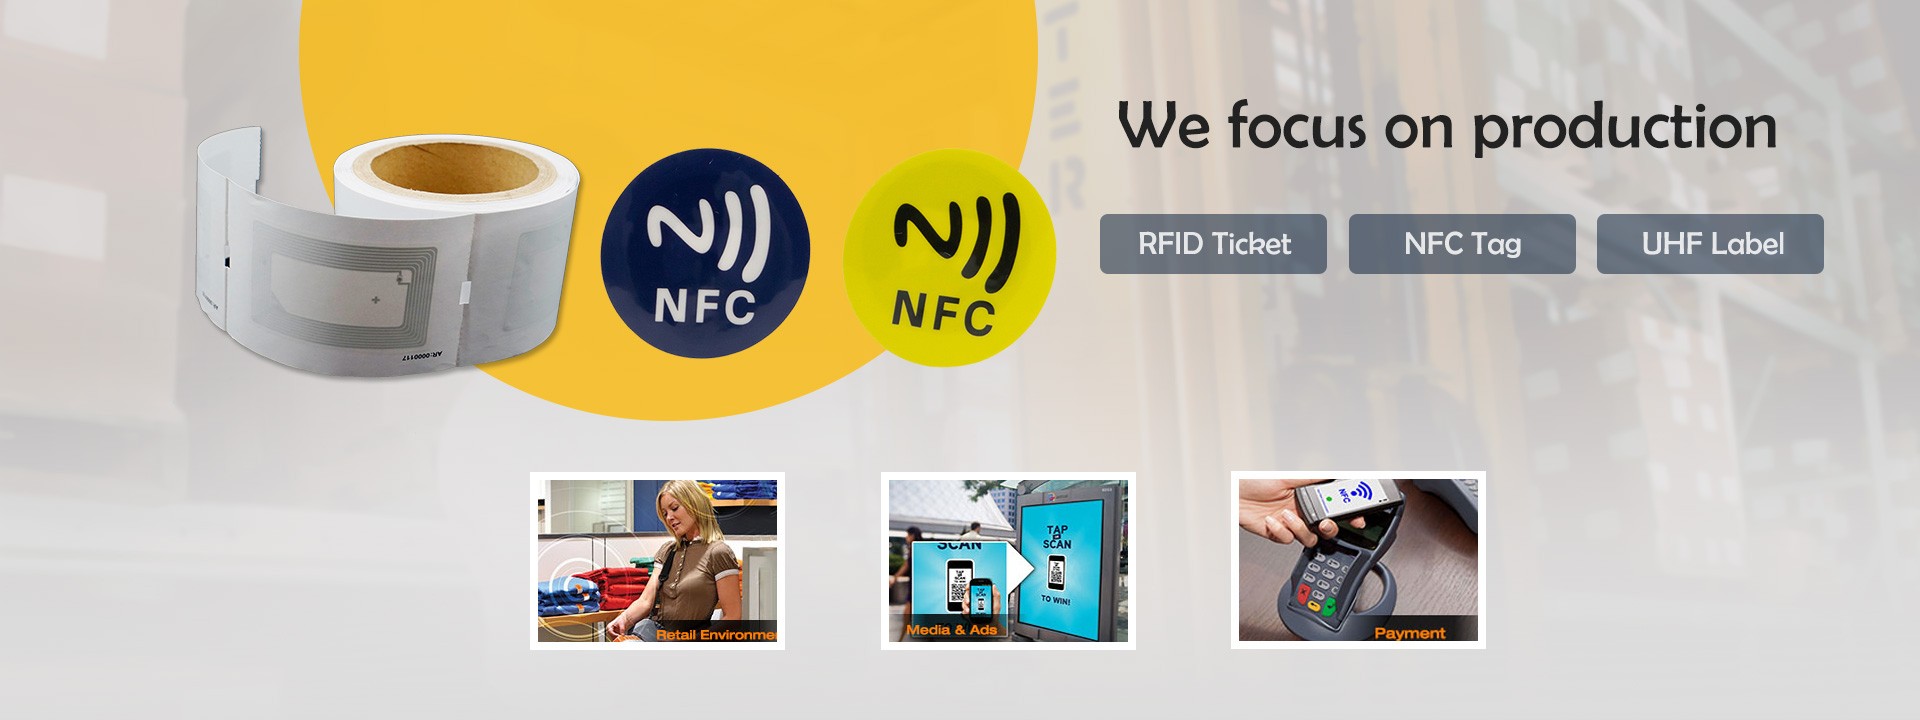 Наклейка NFC